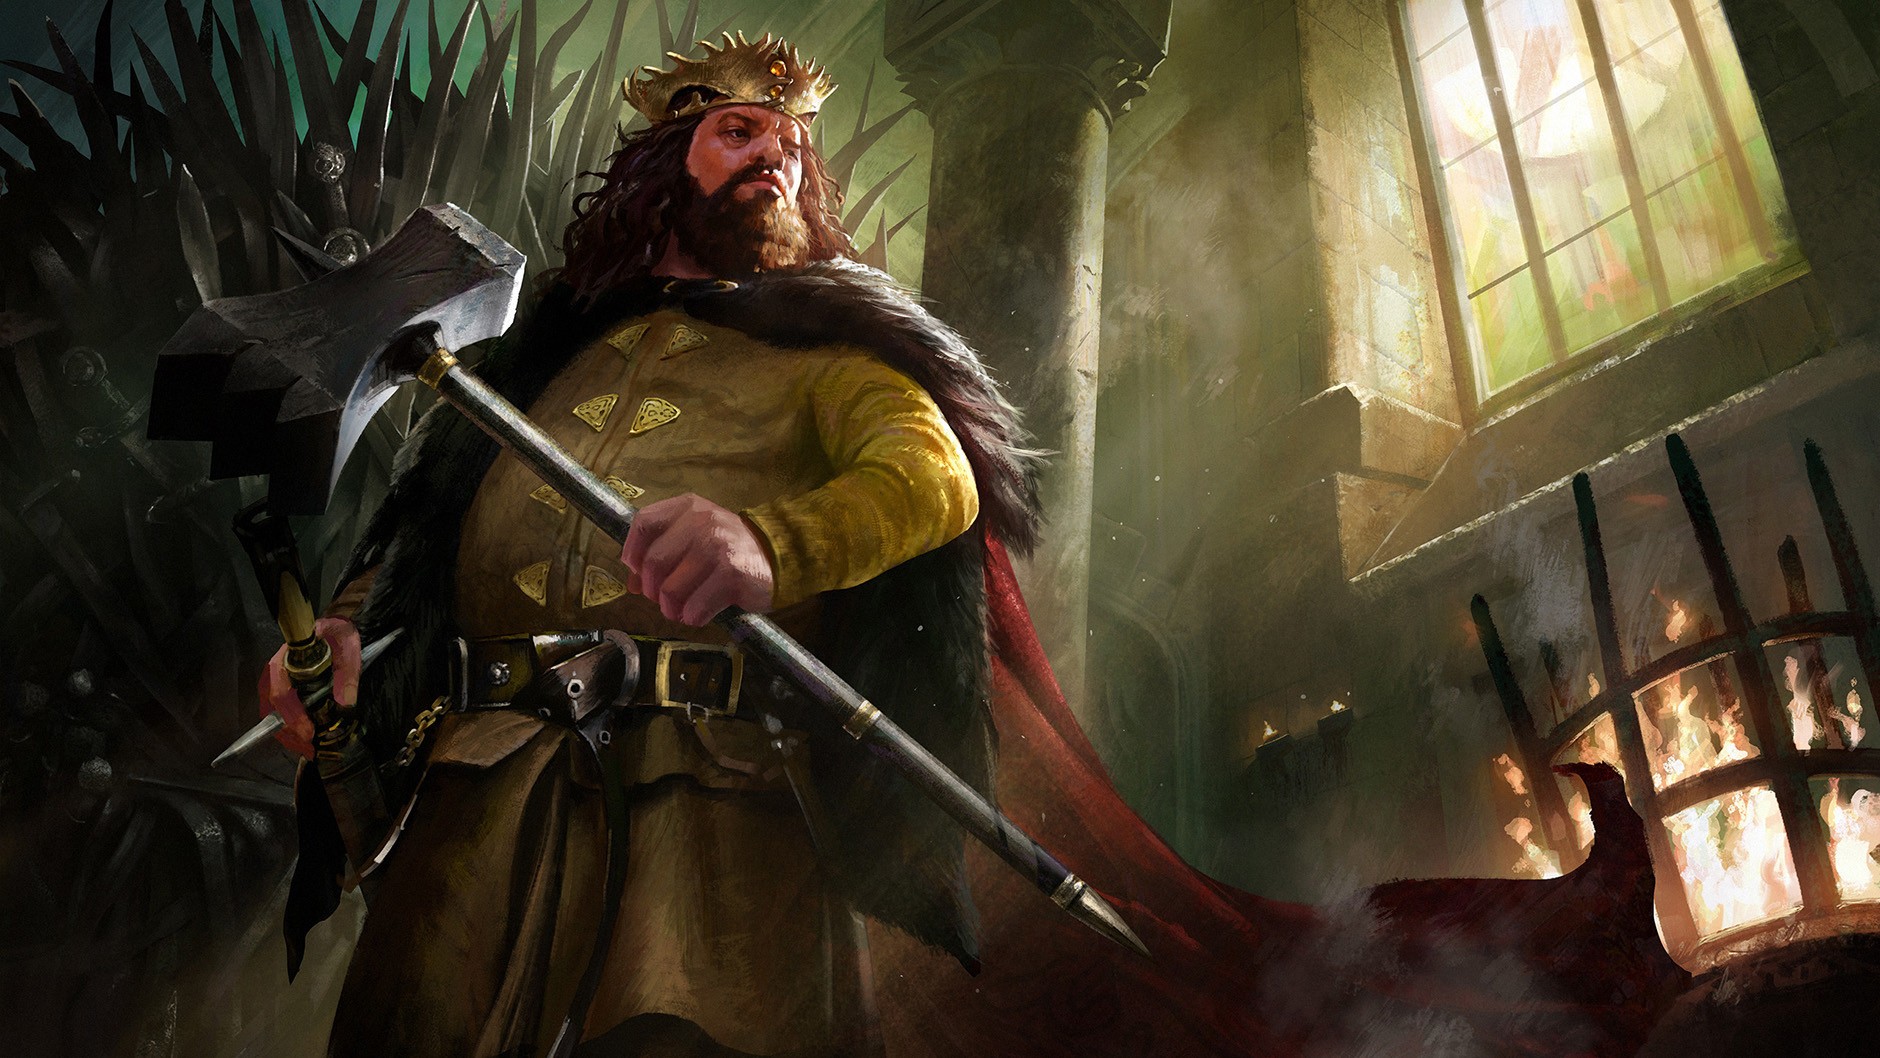 General 1880x1058 digital art fantasy art Game of Thrones Robert Baratheon A Song of Ice and Fire TV series fantasy men hammer crown